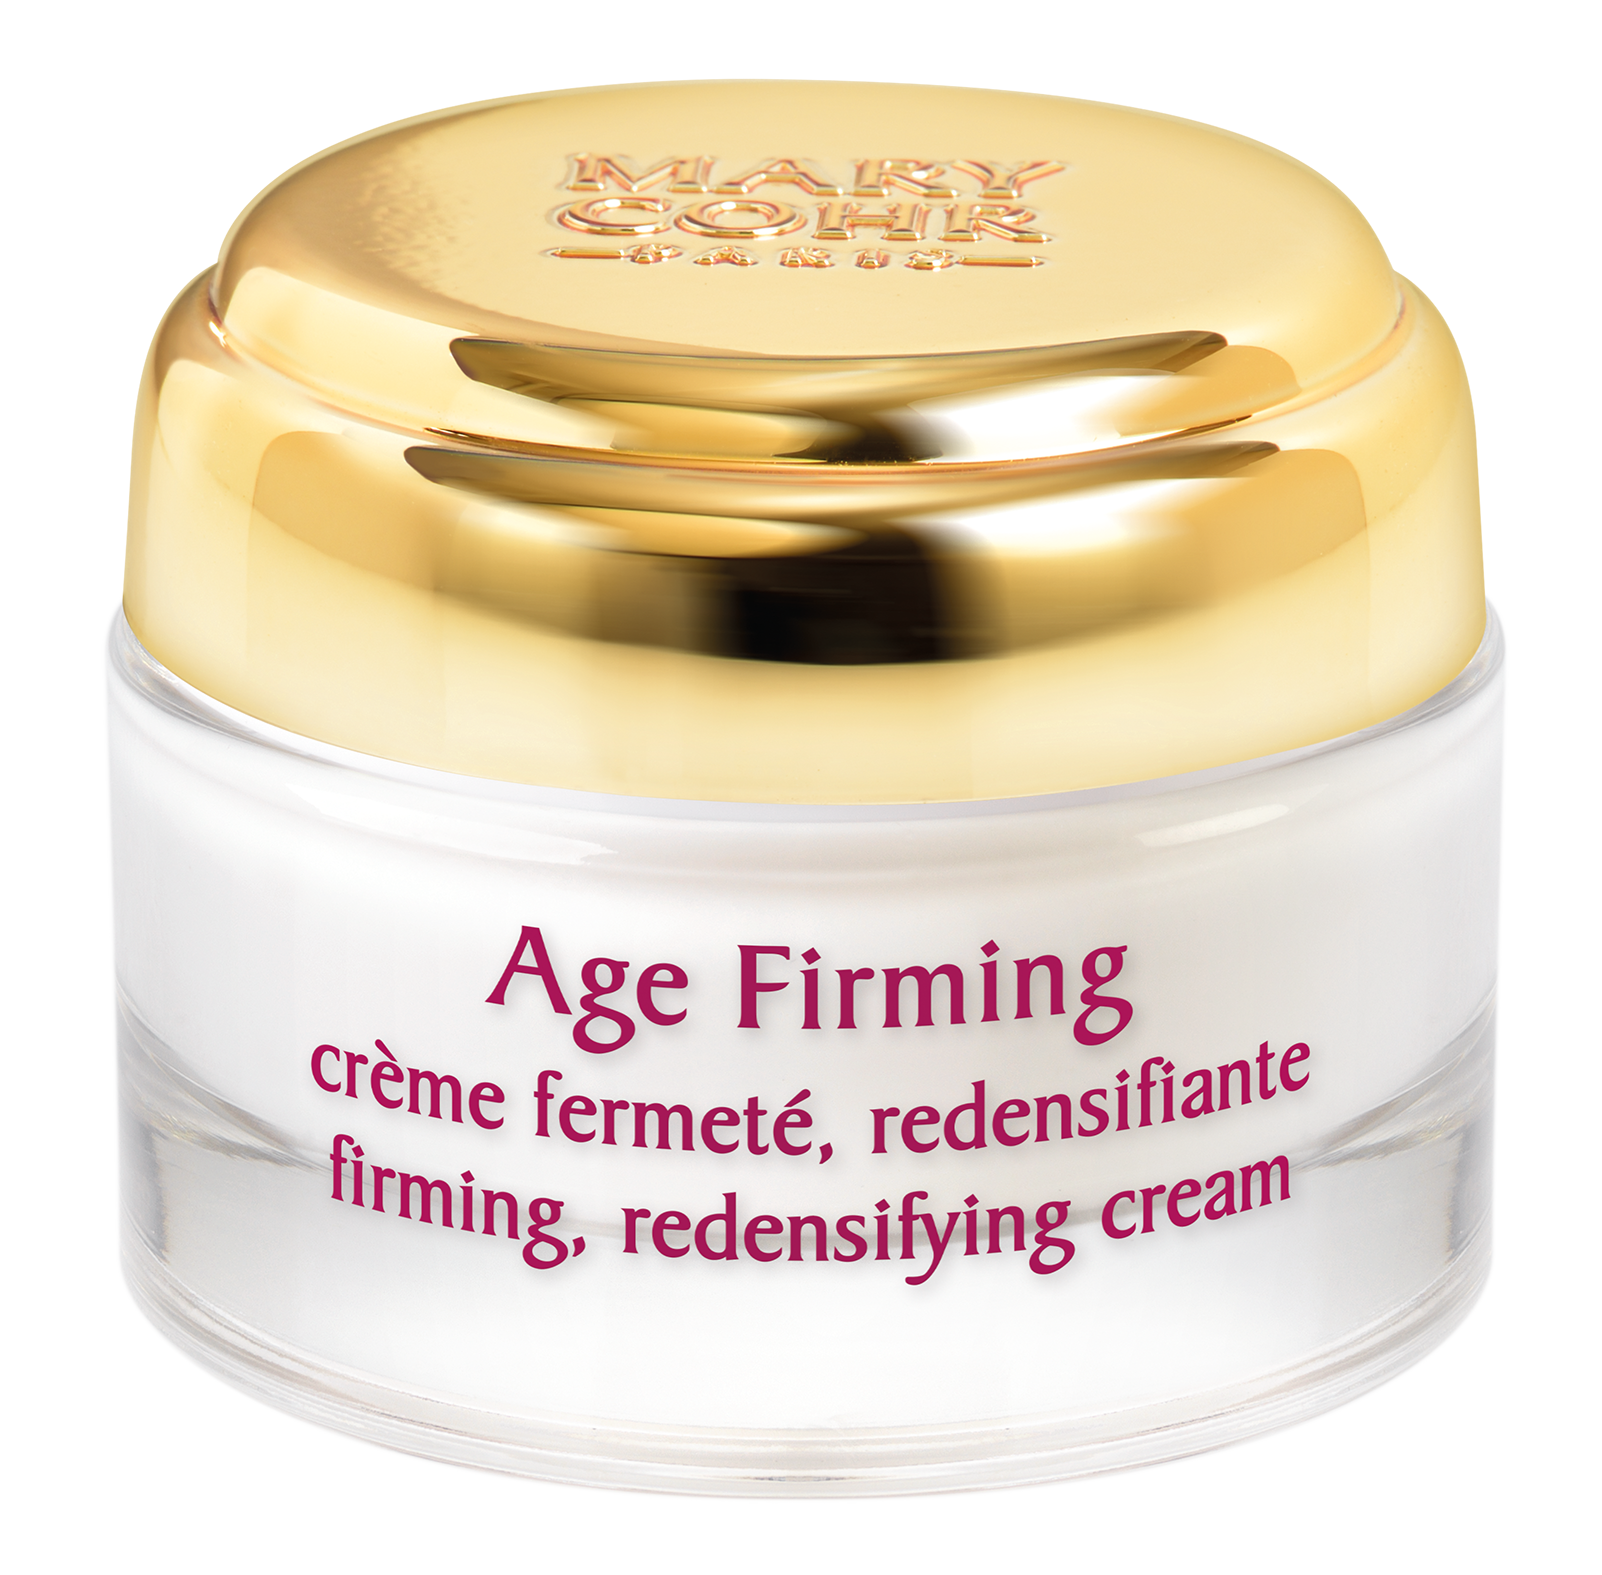 Age firming cream